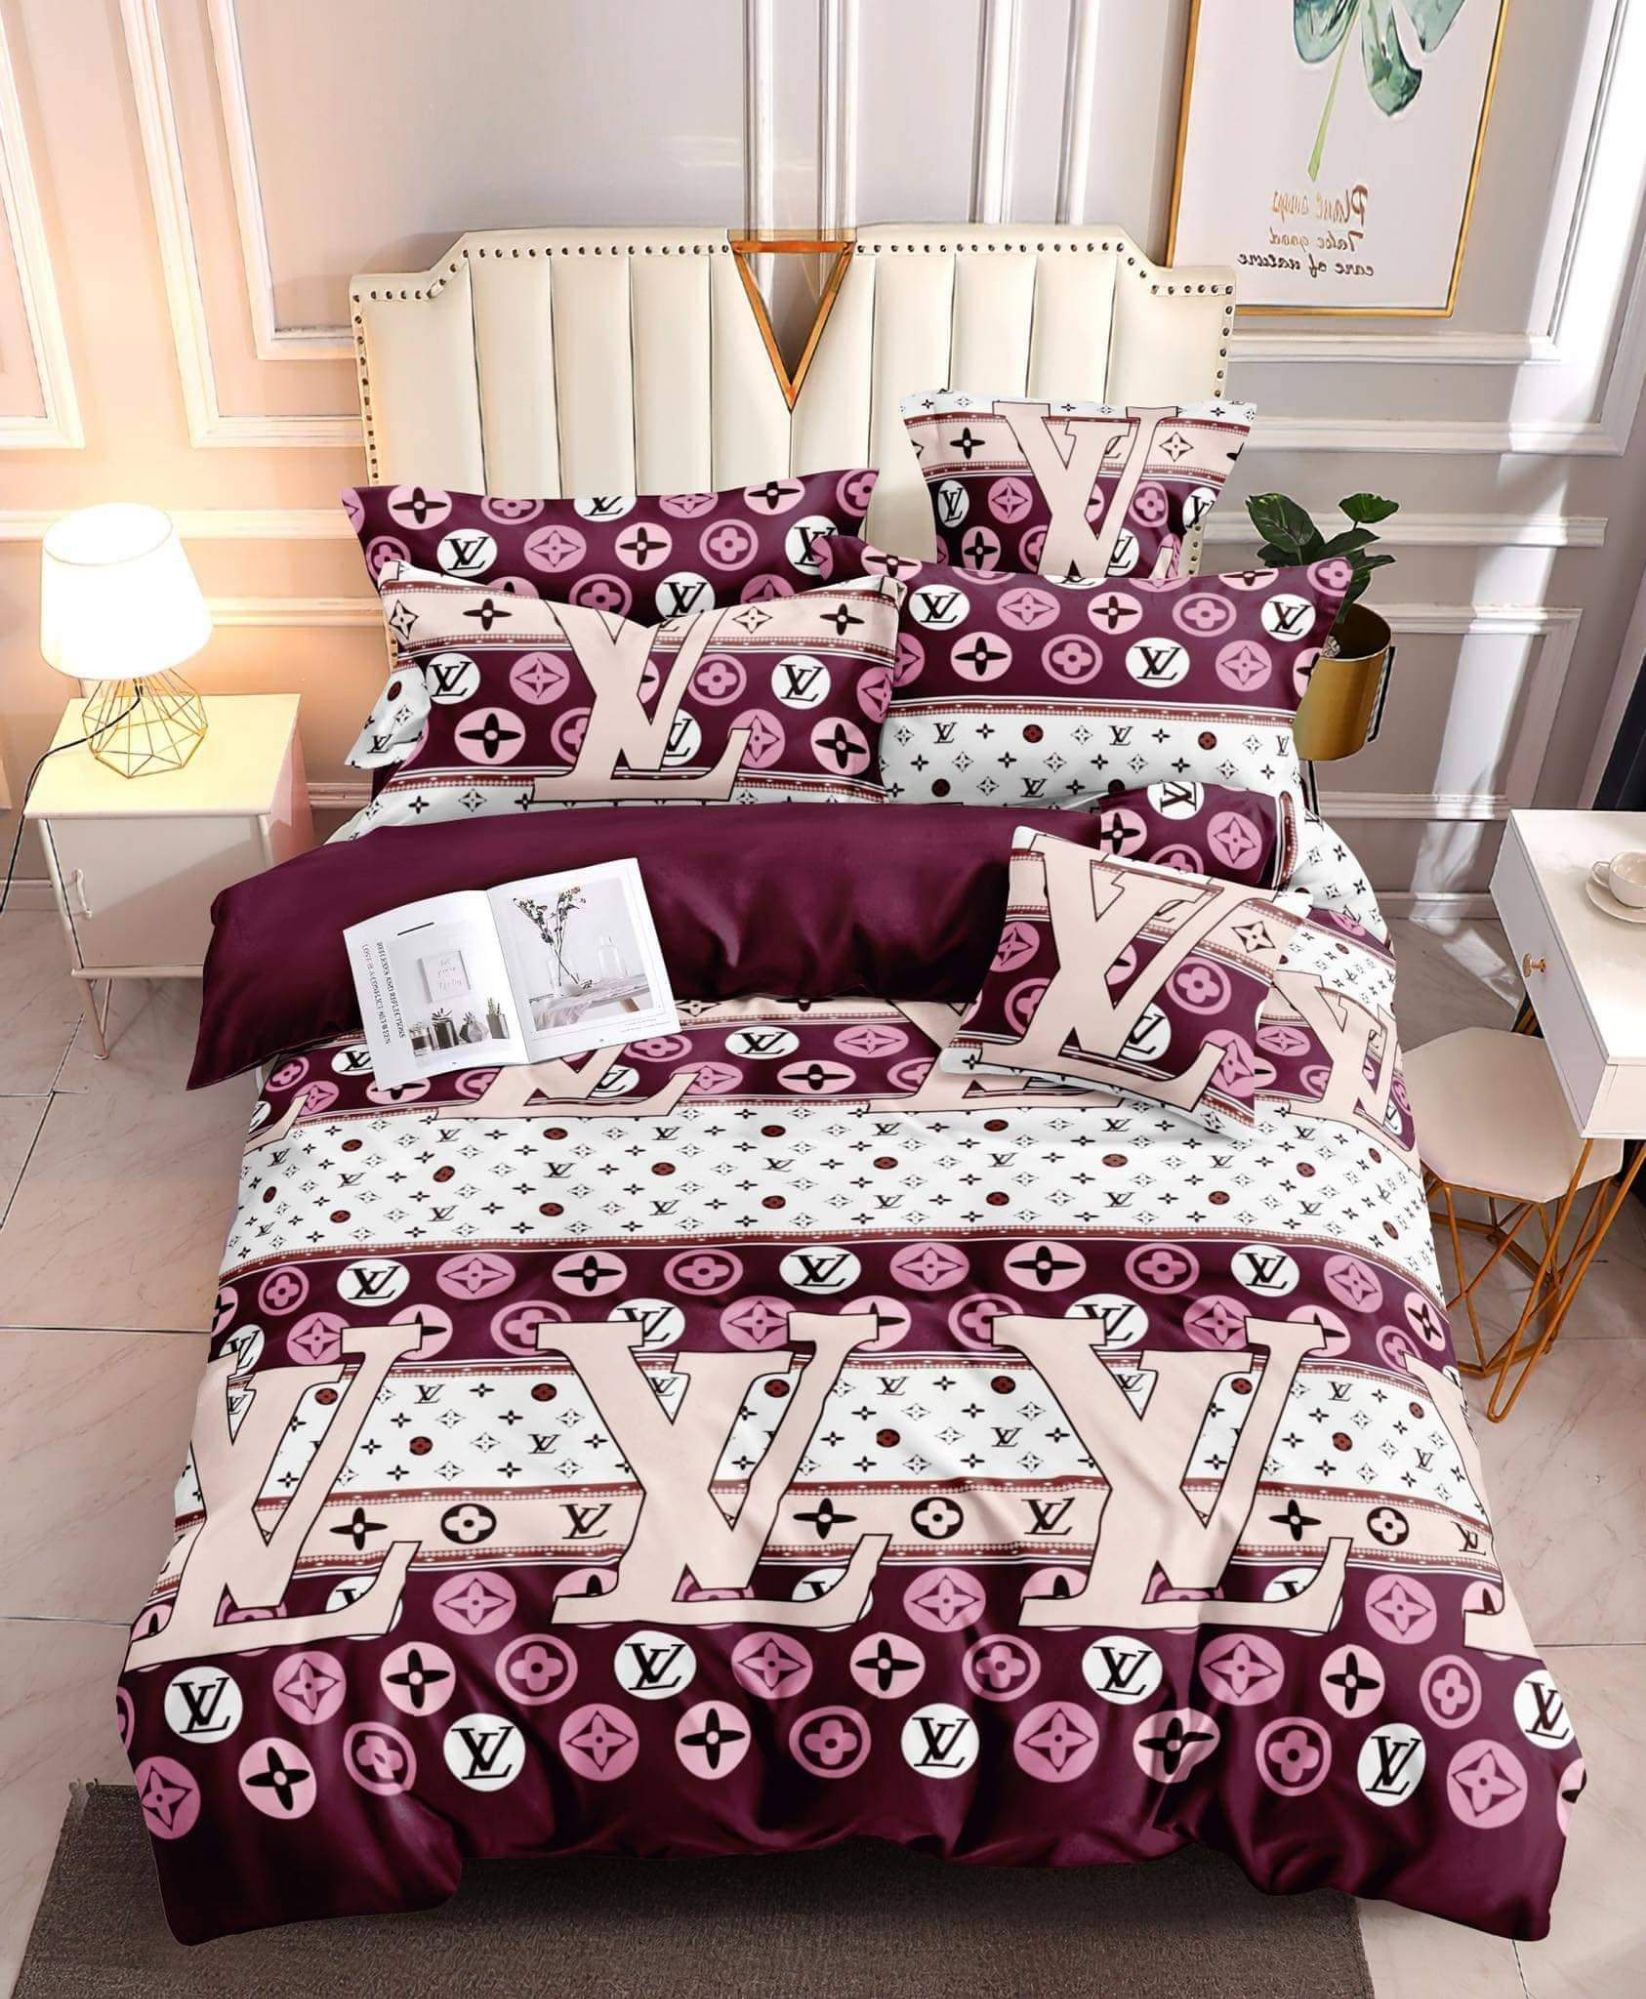 Red Background And White Pattern Louis Vuitton Bedding Sets Bed Sets  Bedroom Sets Comforter Sets Duvet